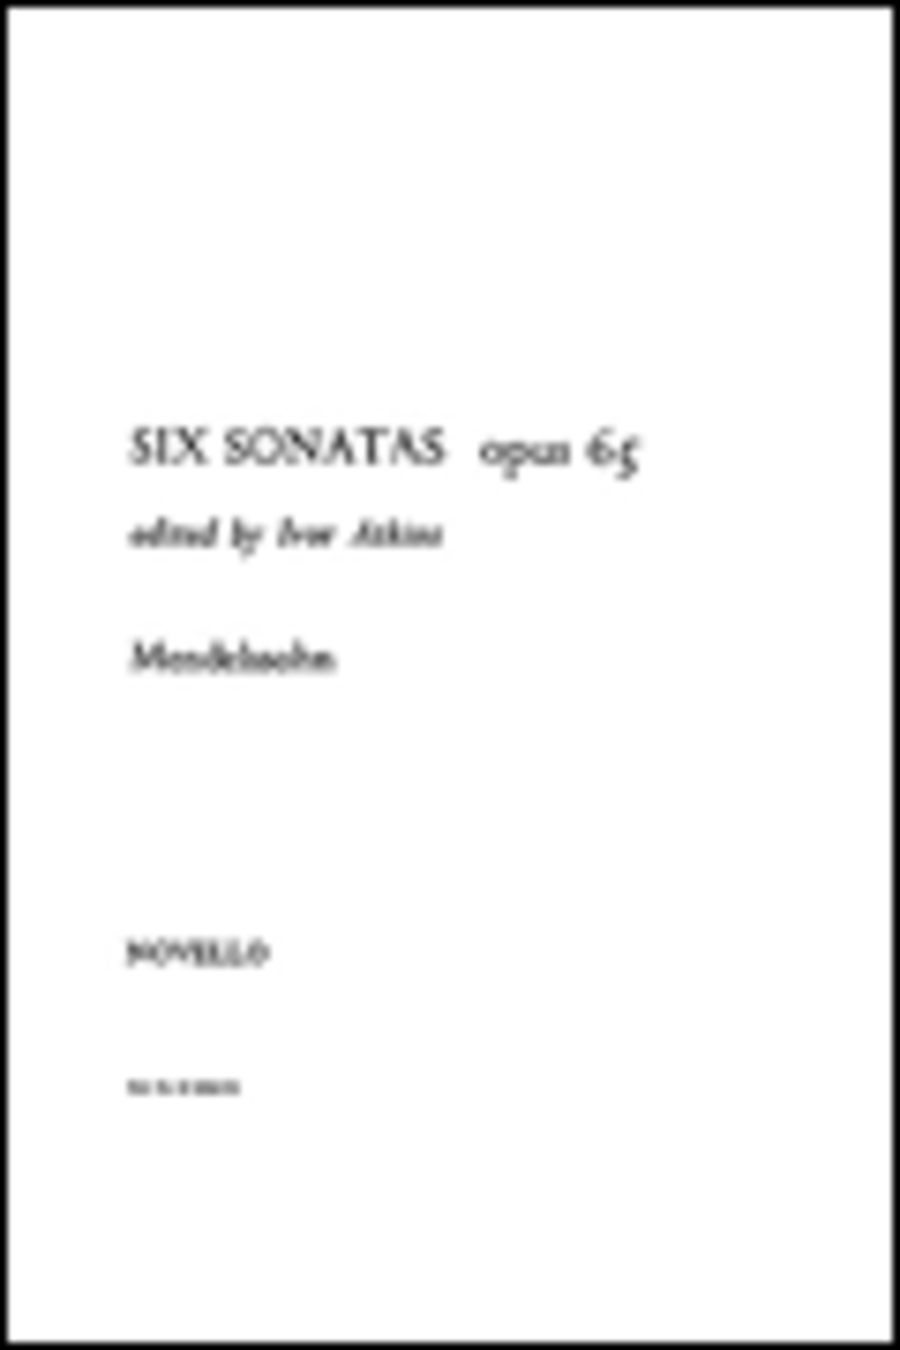 Felix Mendelssohn: Six Sonatas For Organ Op.65 (Atkins)